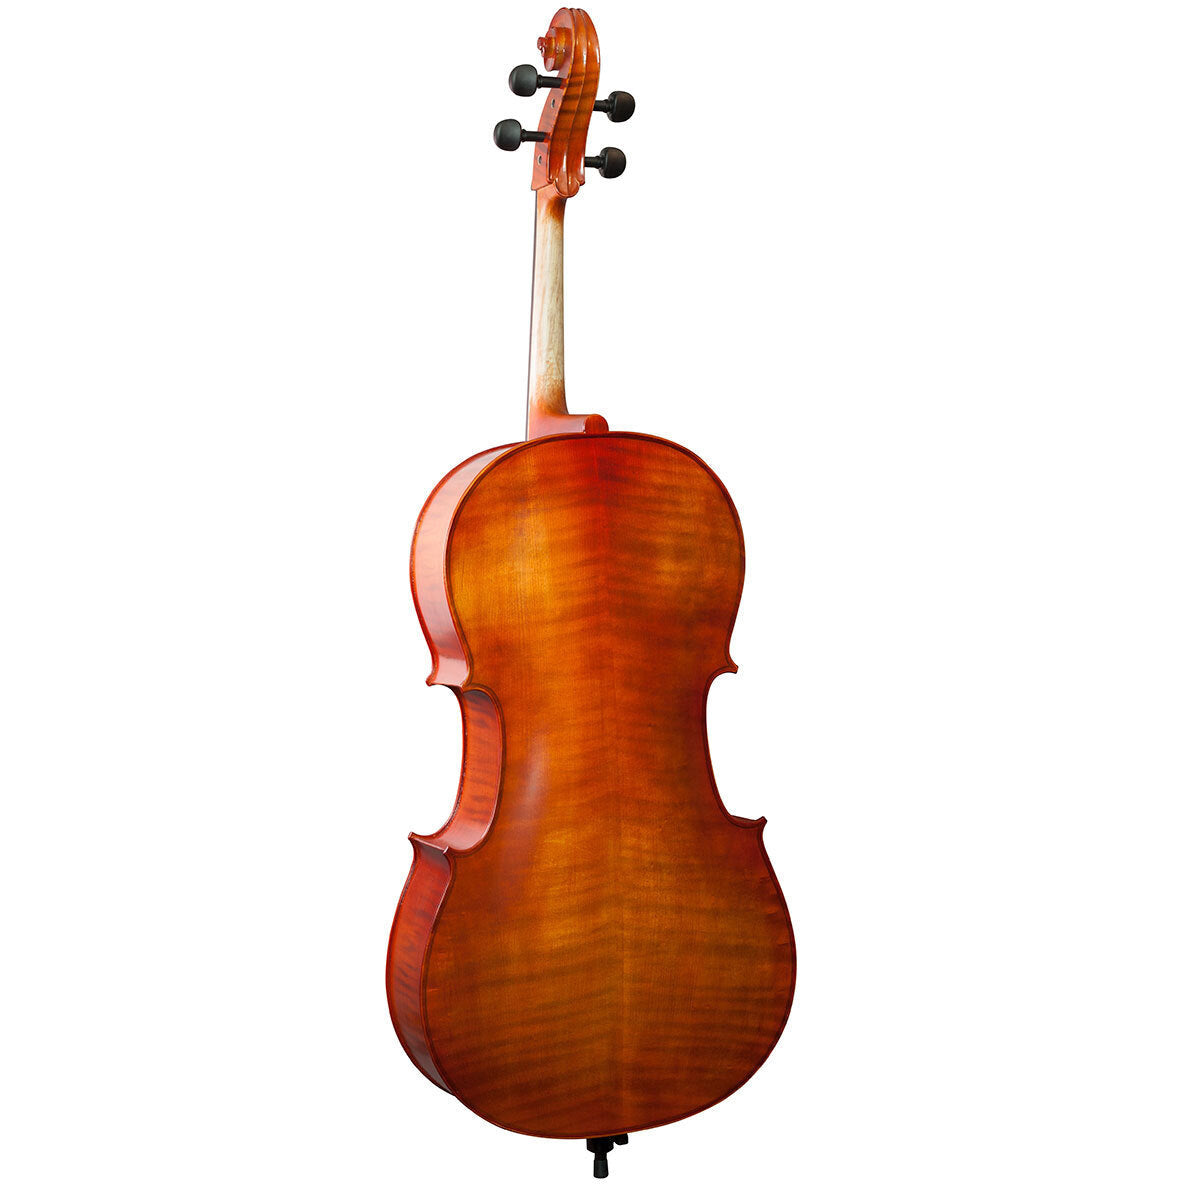 Hidersine HW3182AG Vivente Academy Finetune Cello Student Outfit 4/4